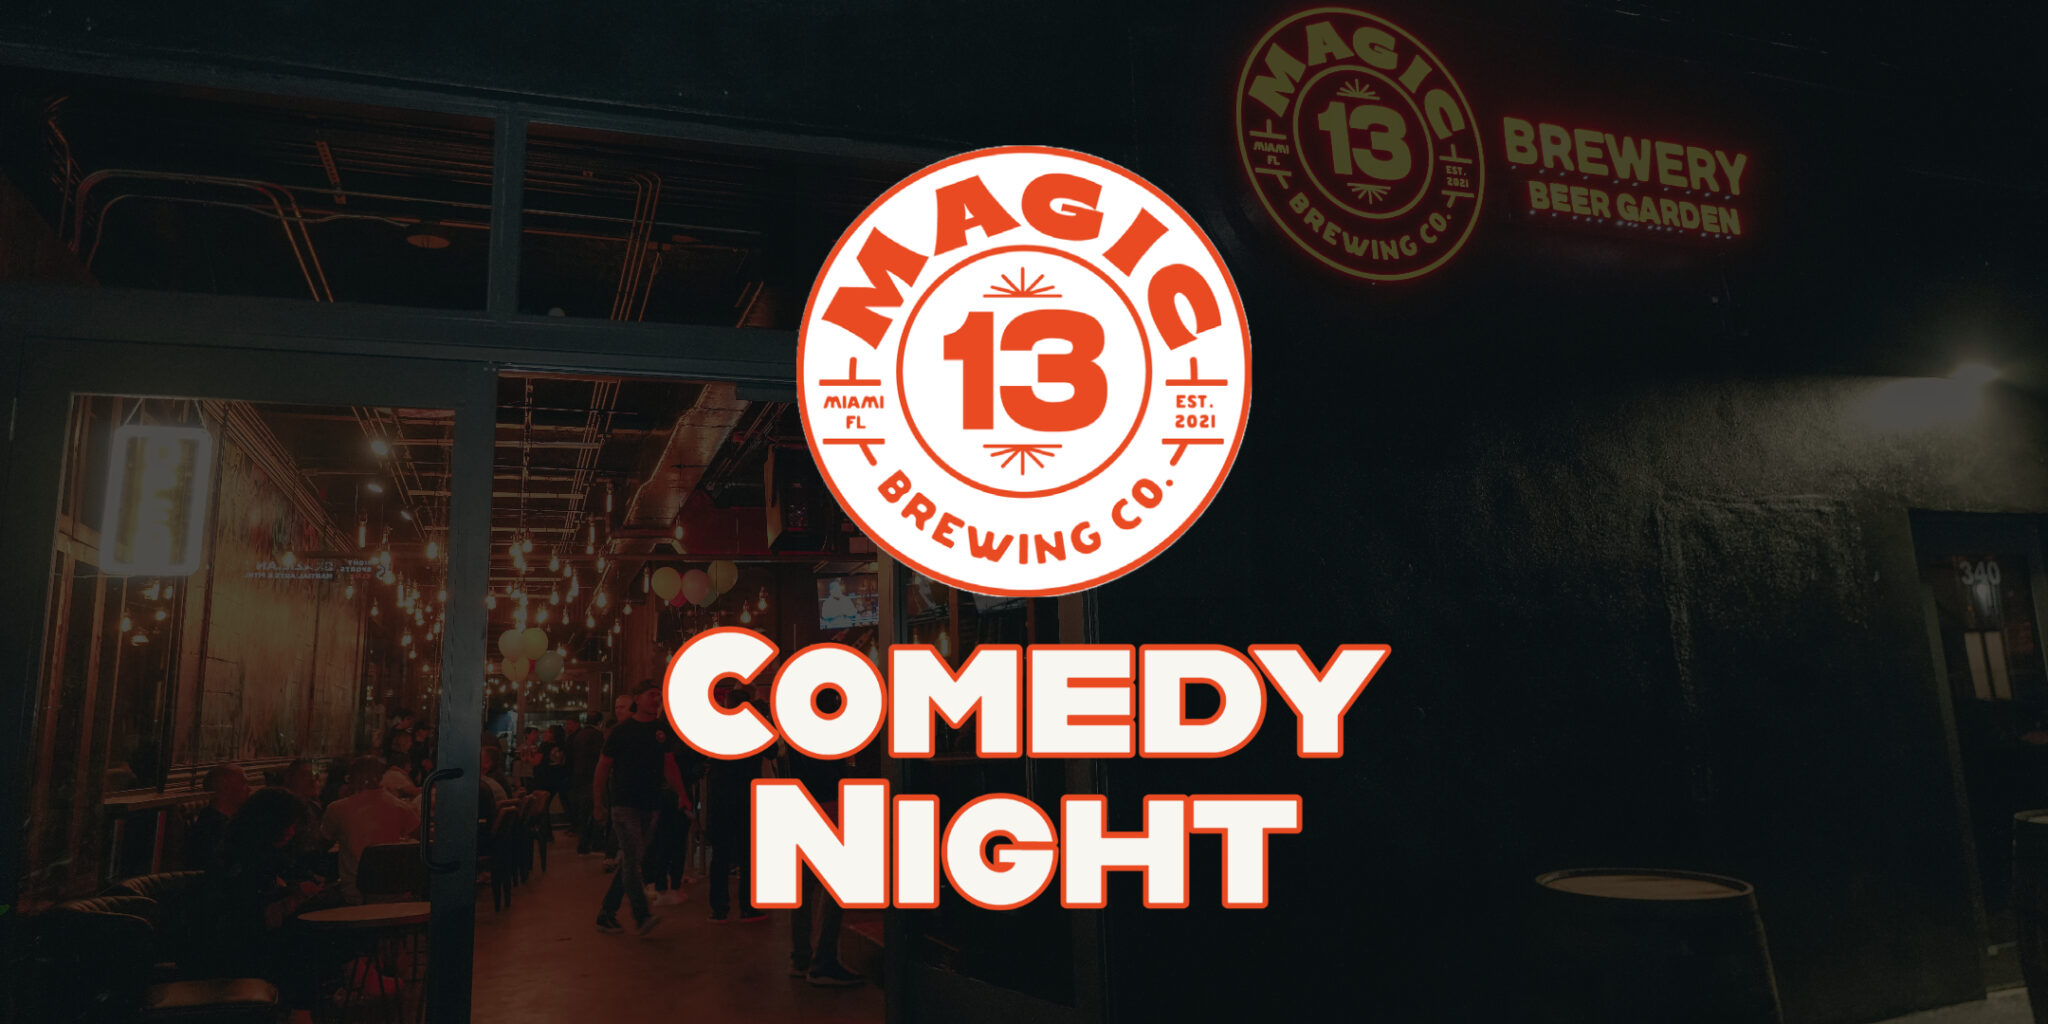 Magic 13 Brewing Co. Comedy Night